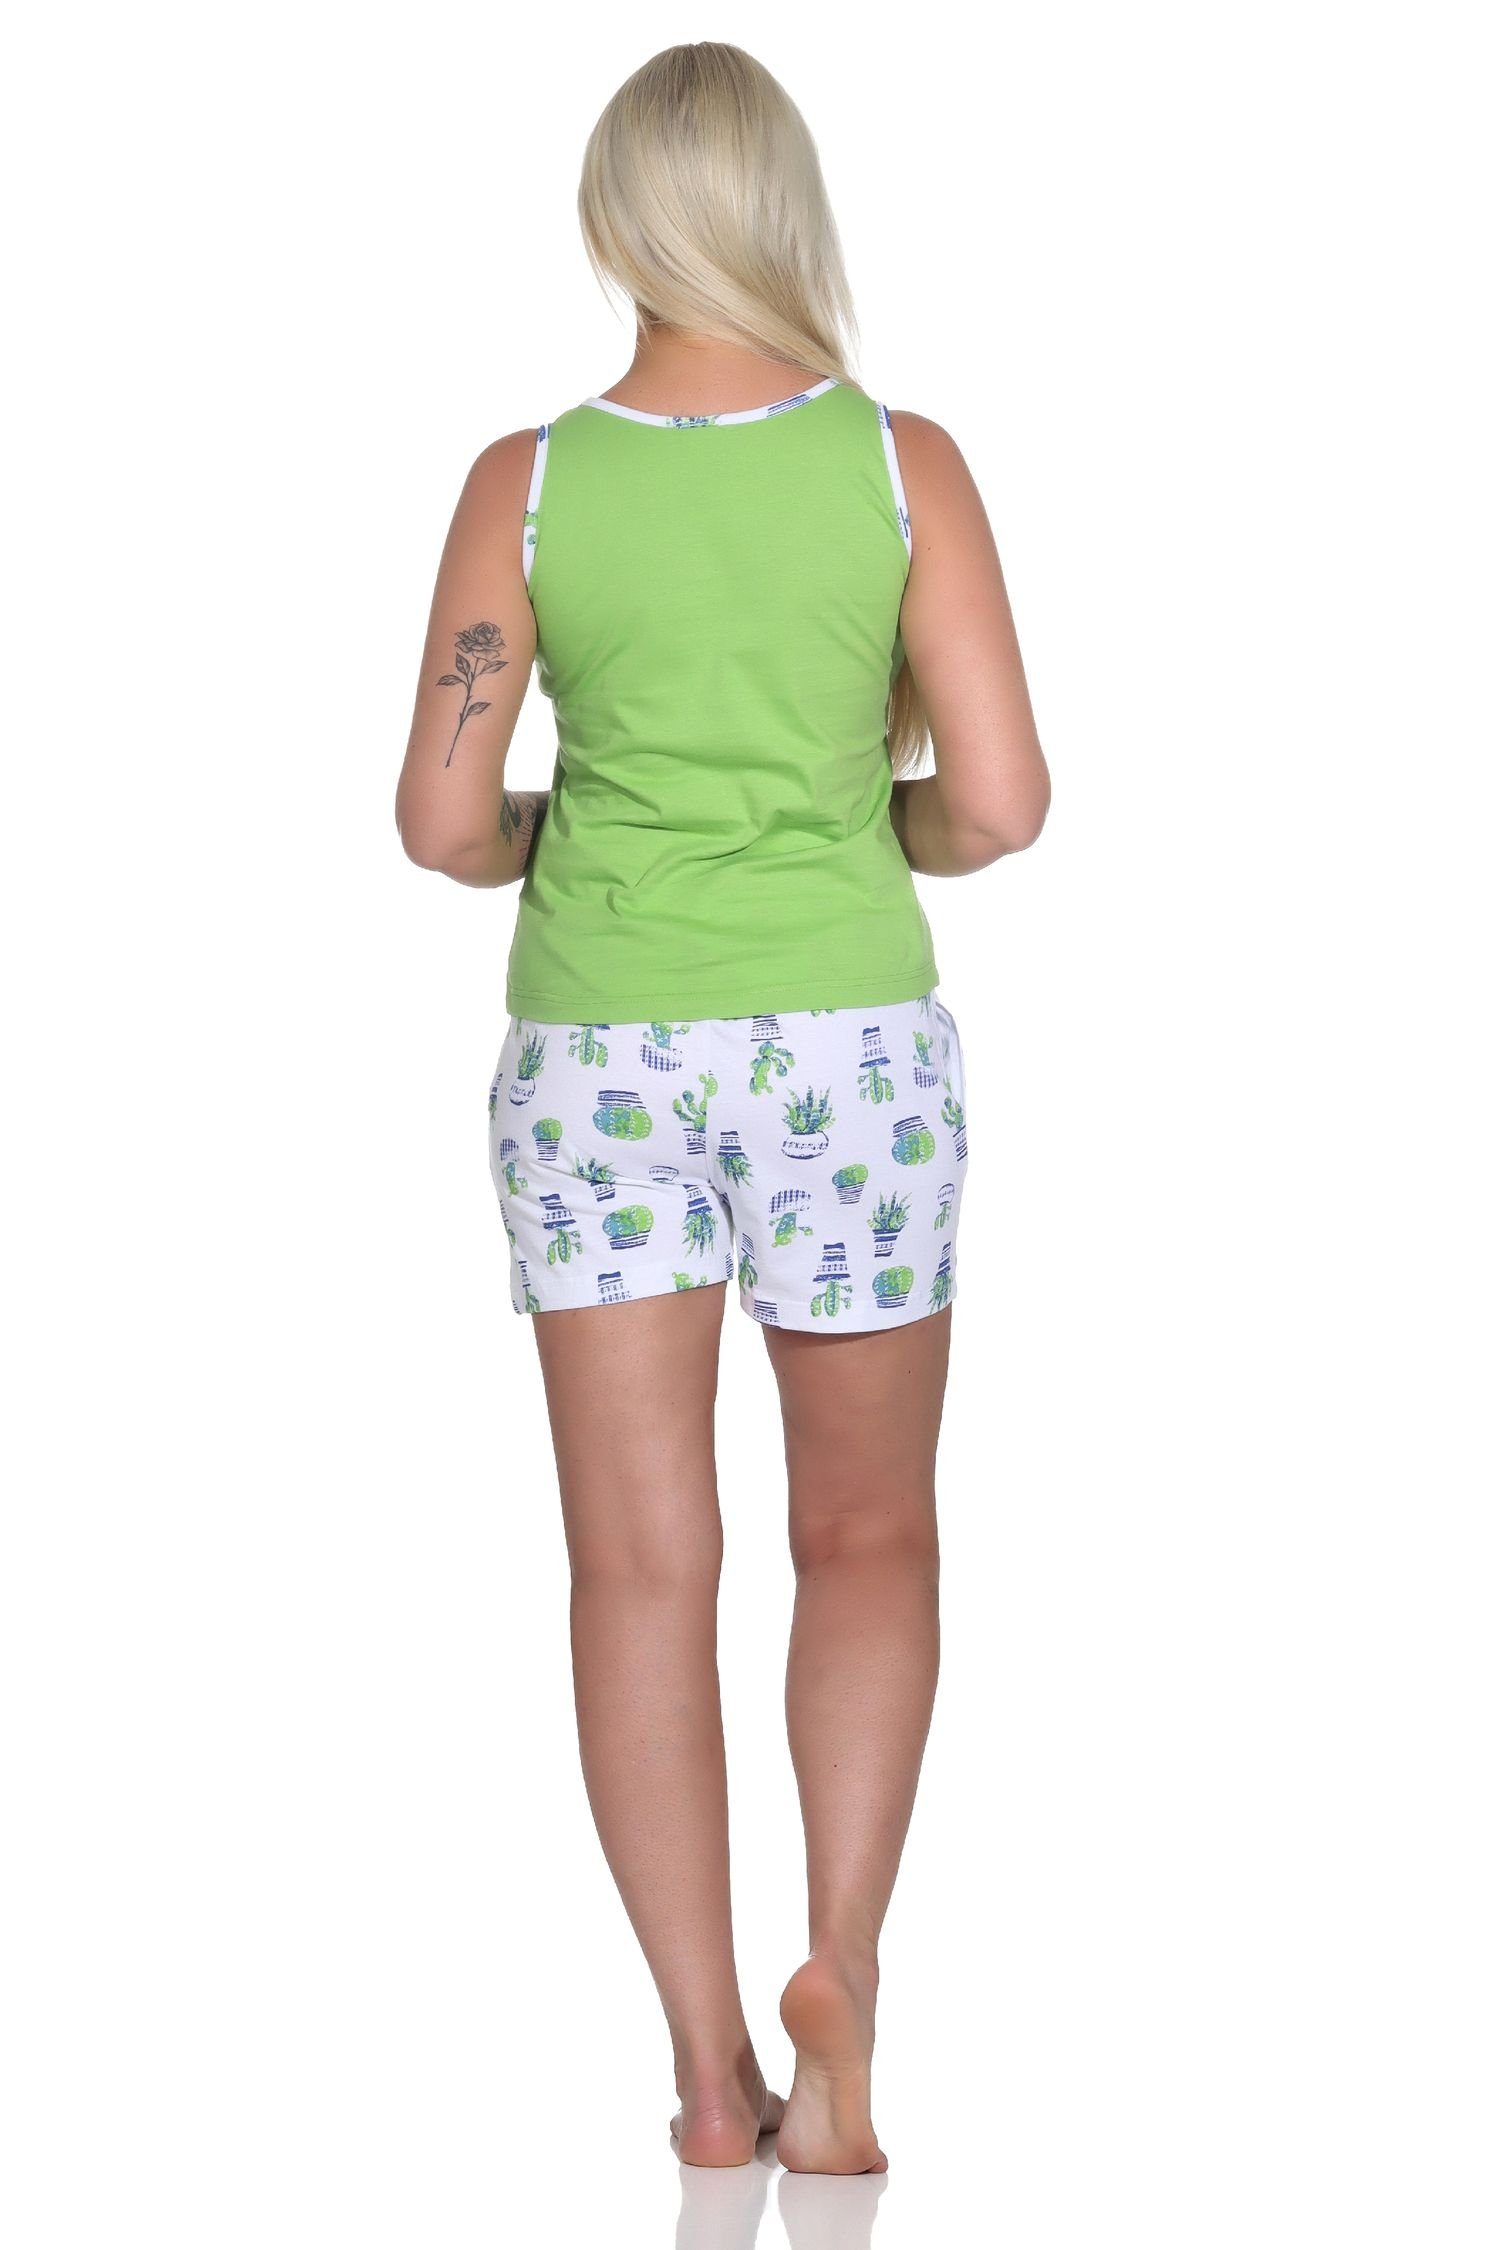 mit grün Shorty Normann Damen Pyjama Pyjama Motiv Ärmelloser als Schlafanzug Kaktus